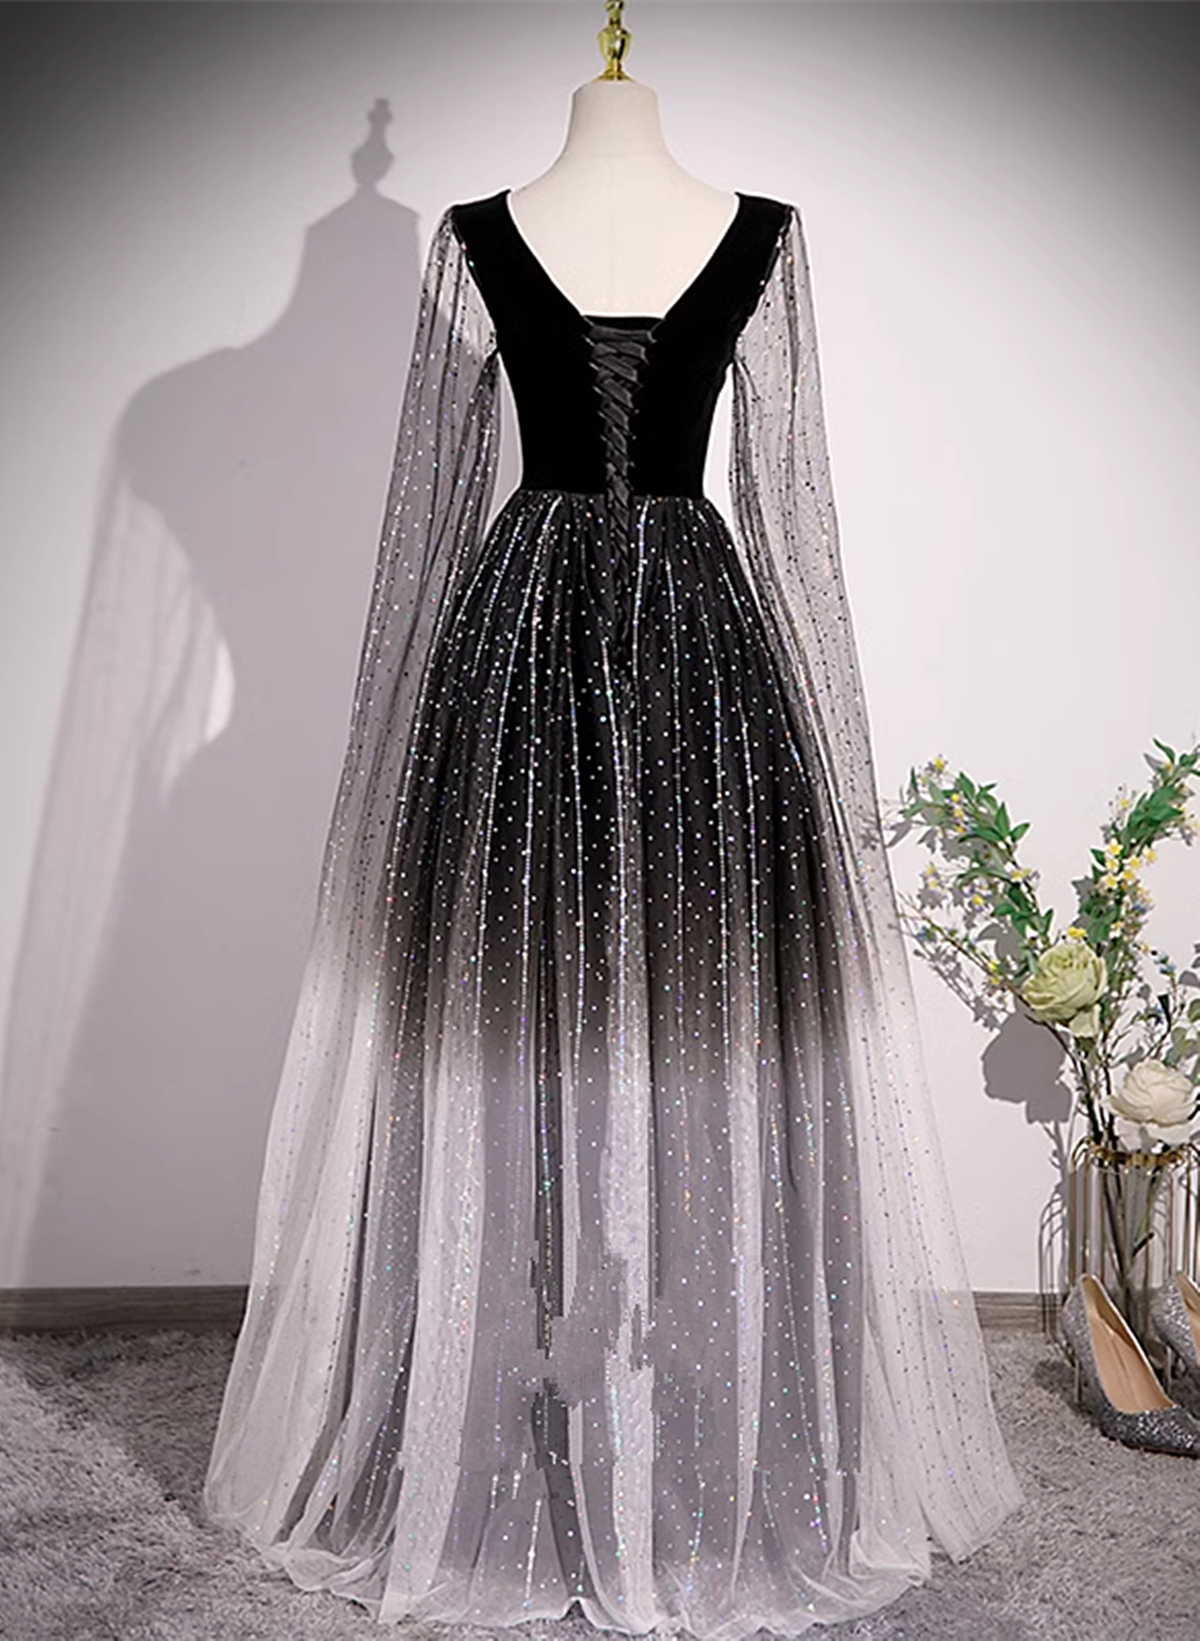 Black Gradient Tulle V-neckline Long Beaded Prom Dress, Black Party Dress Formal Dress